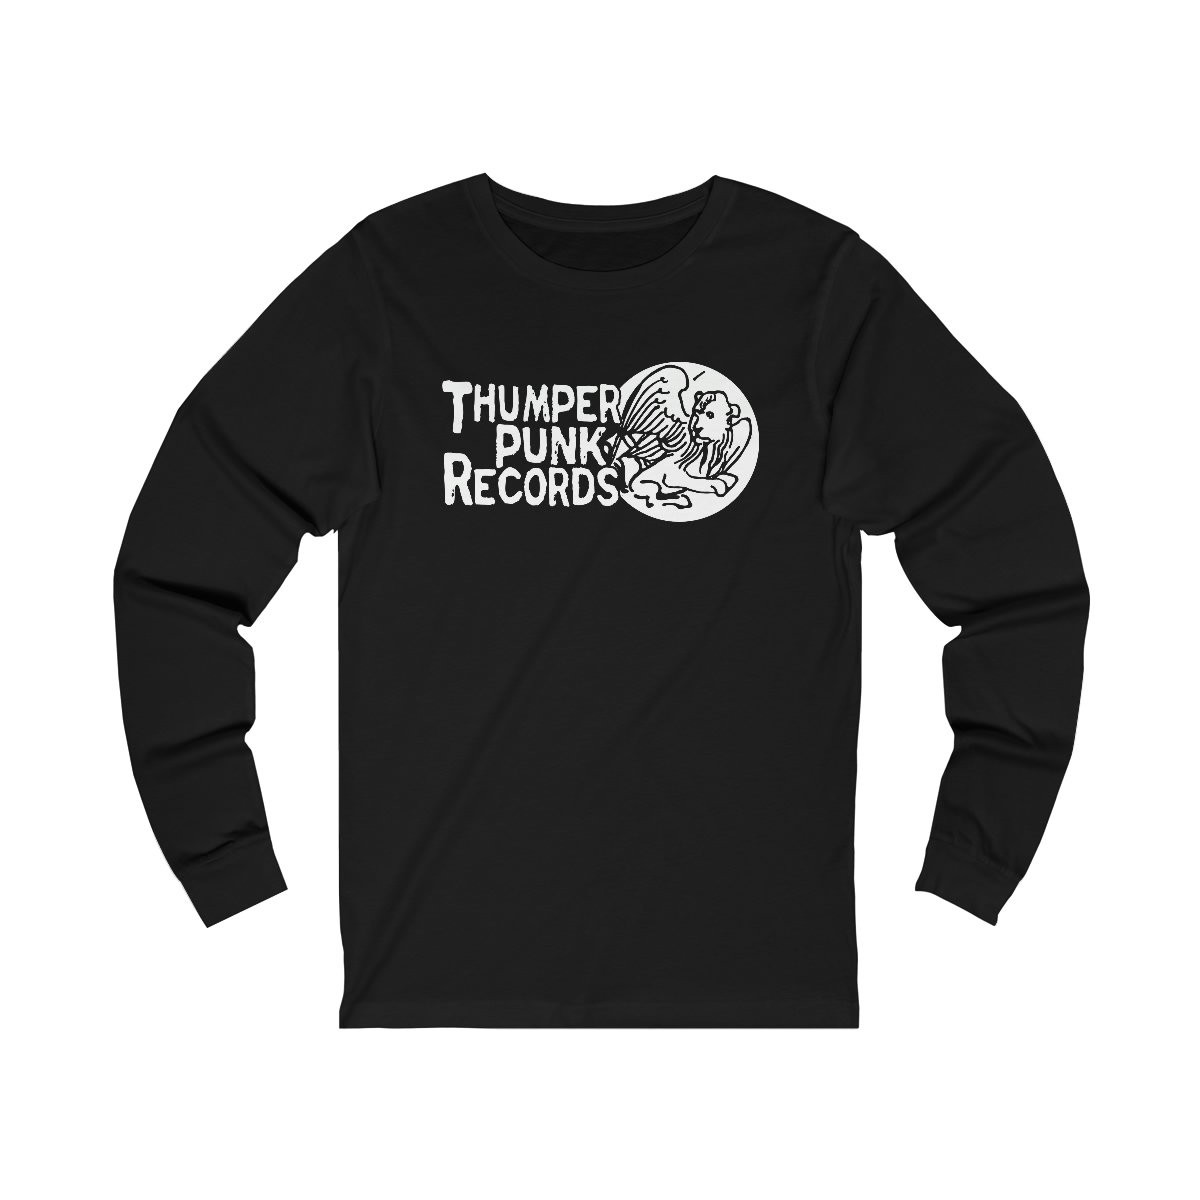 Thumper Punk Records Long Sleeve Tshirt